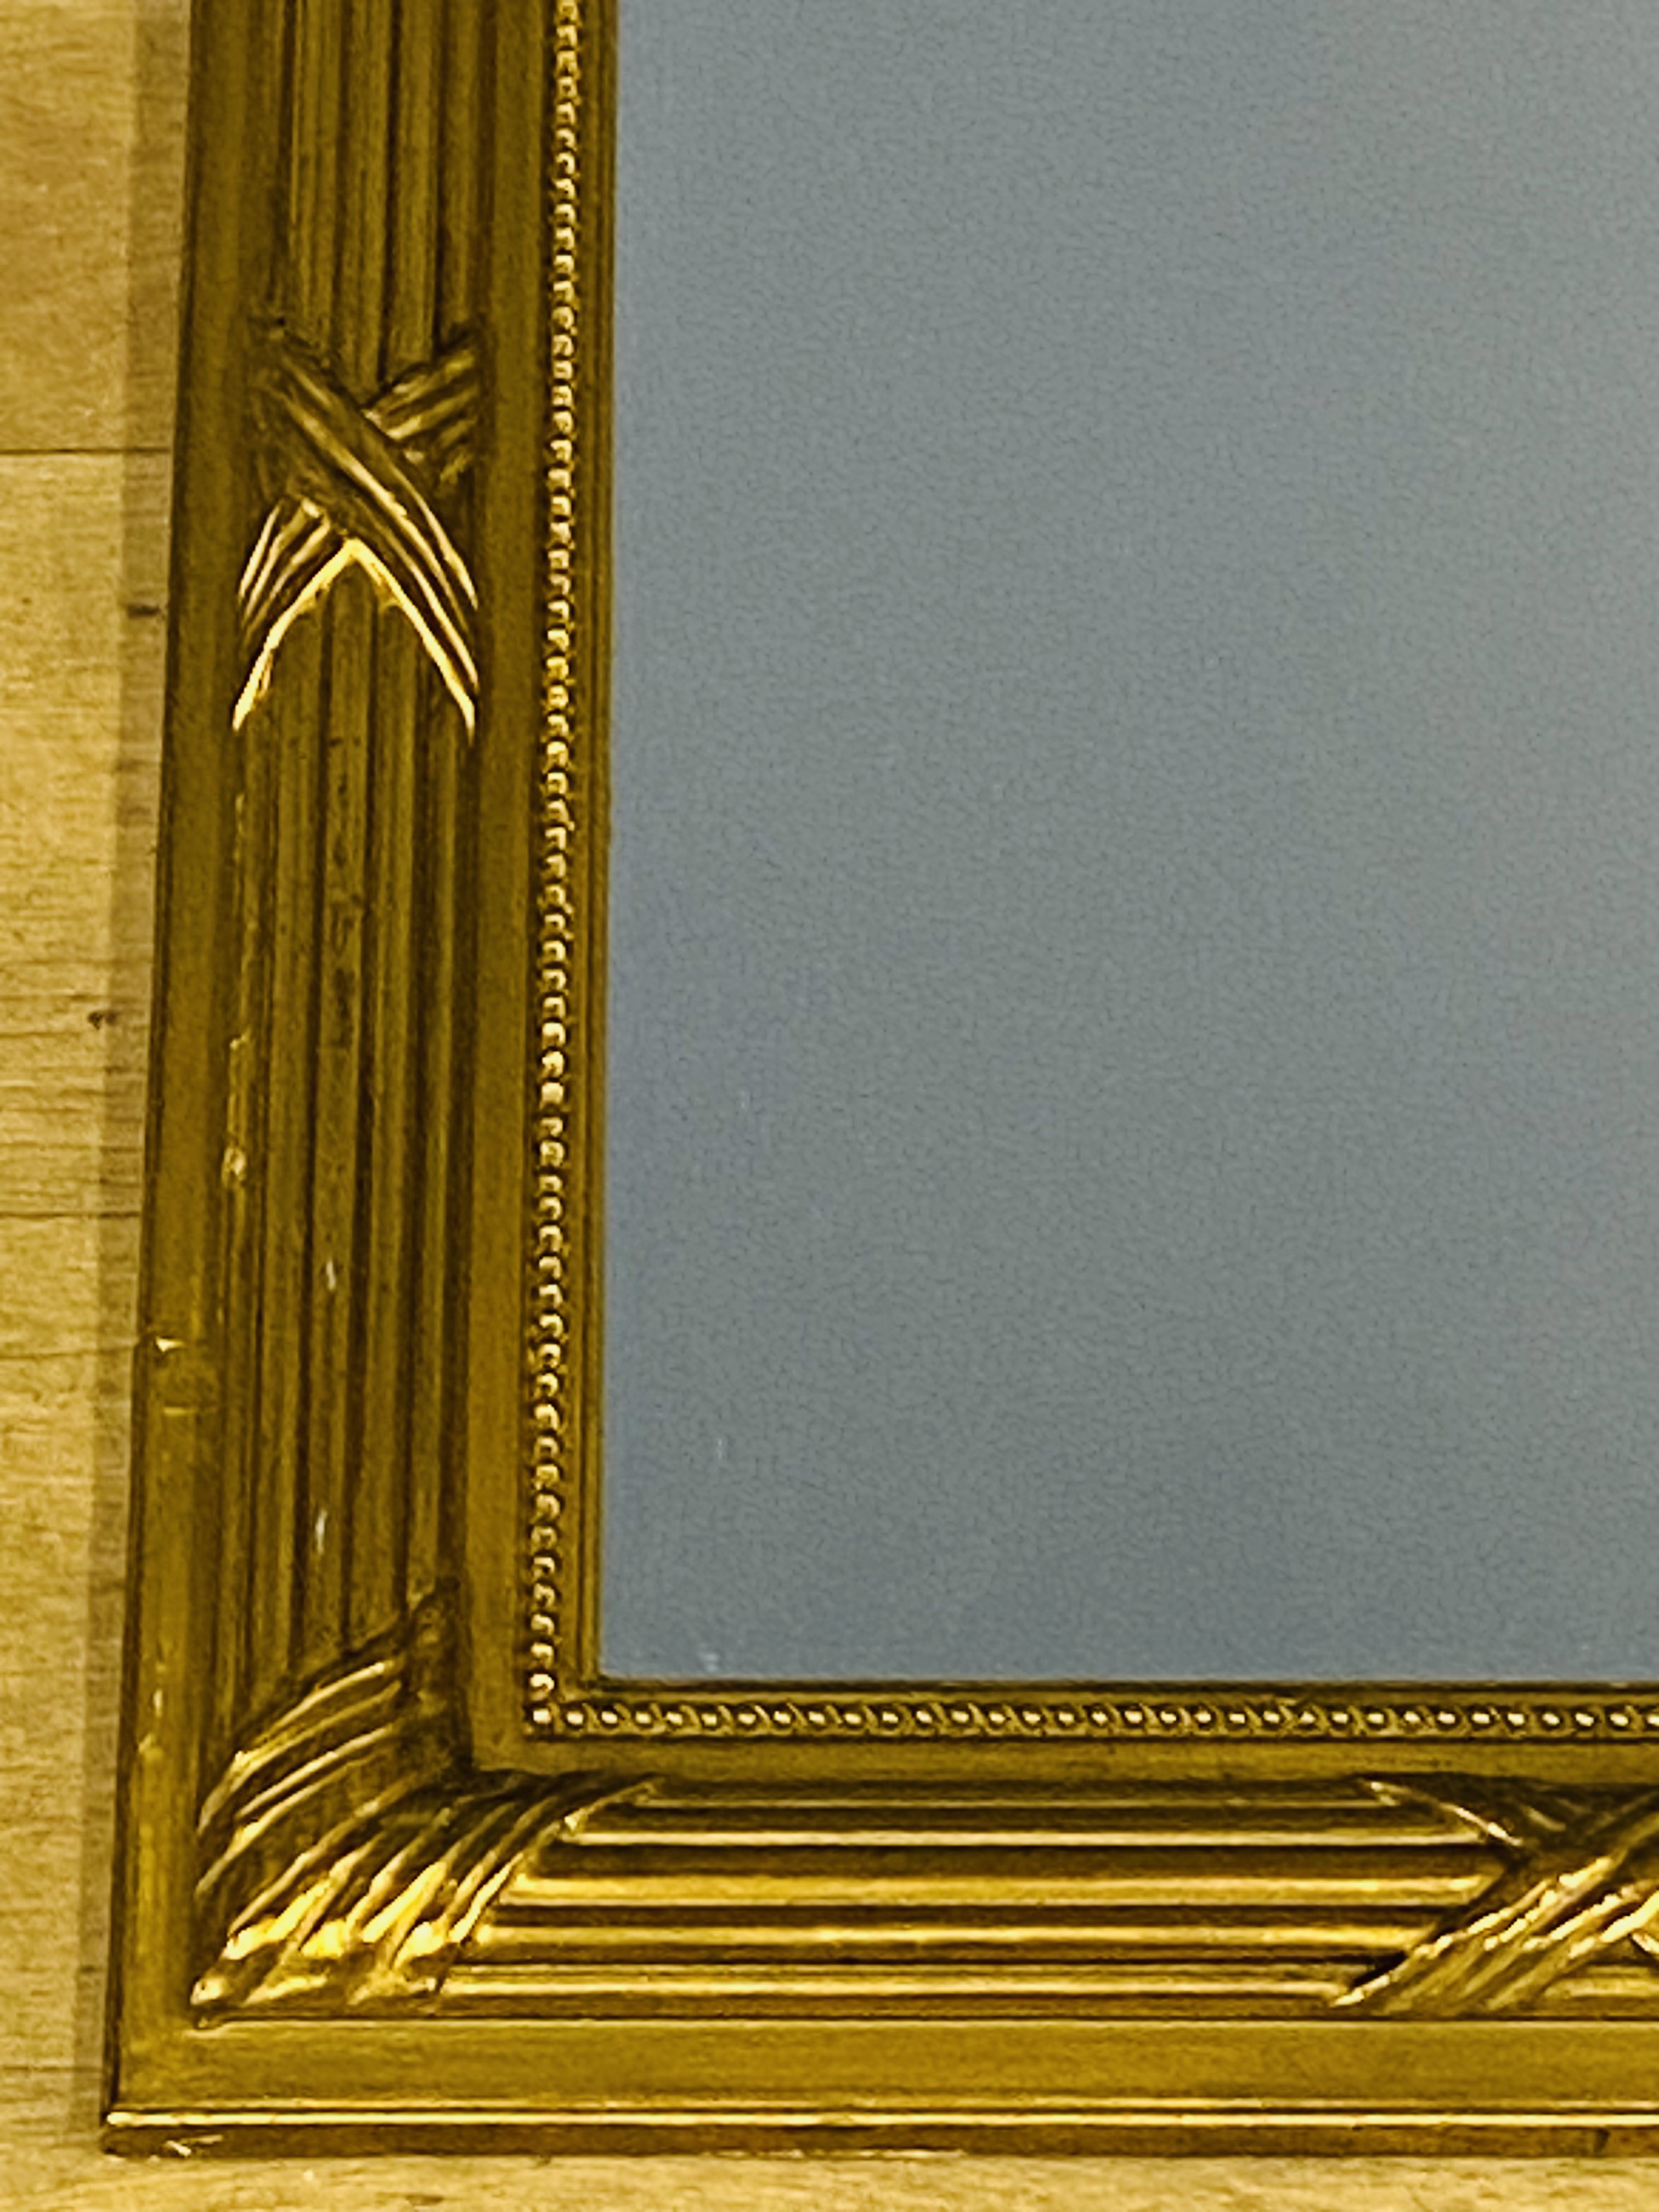 Gilt framed mirror - Image 3 of 3